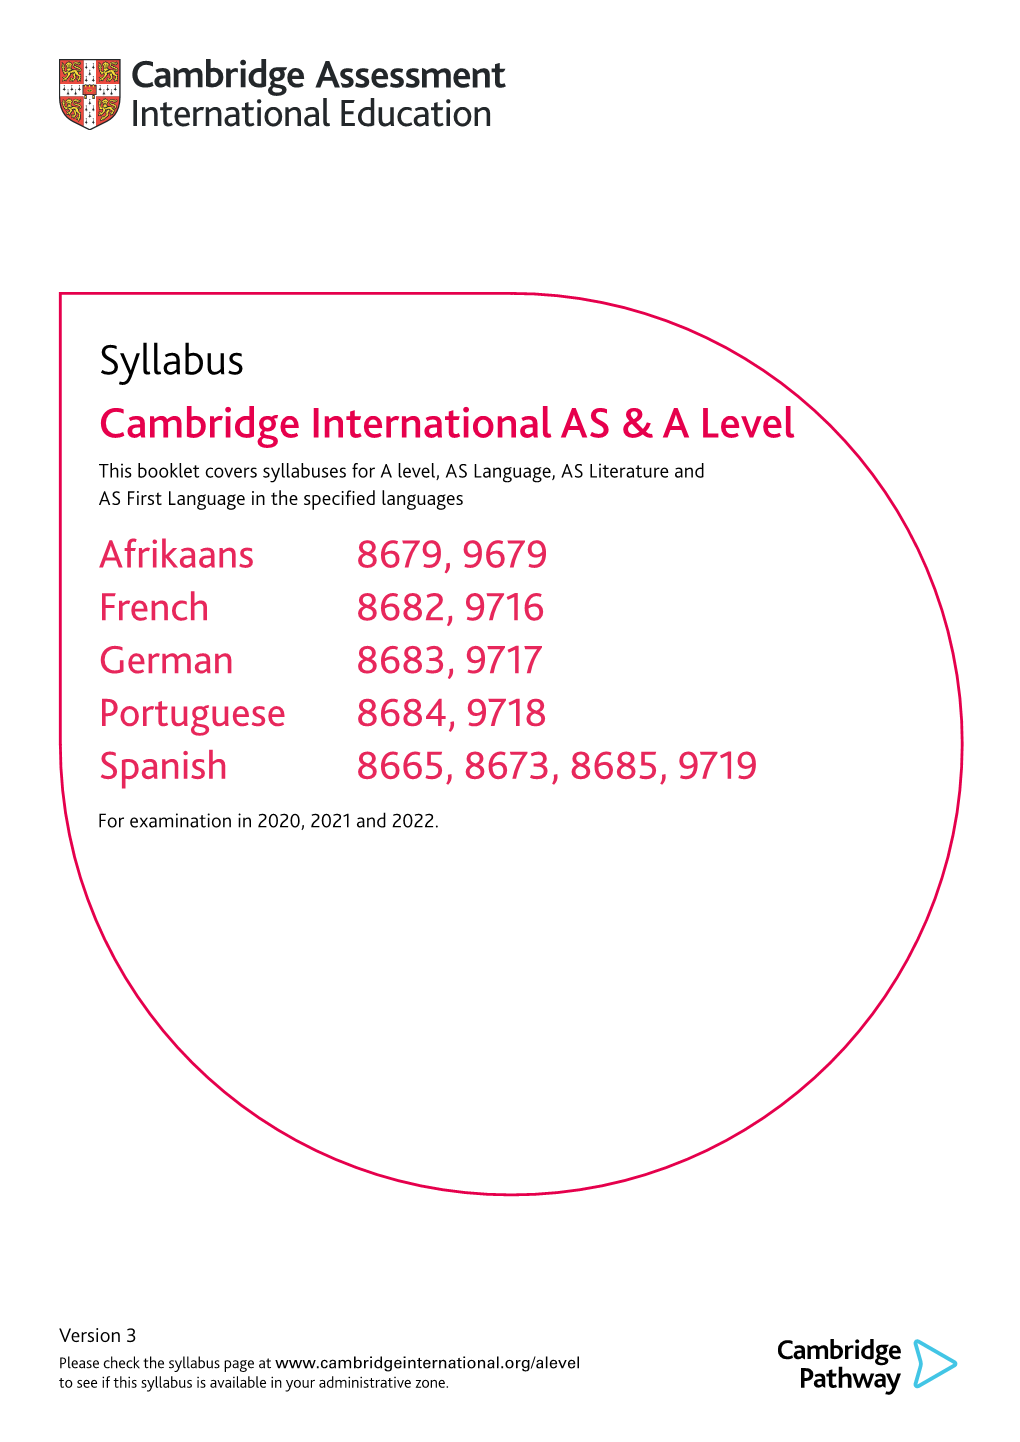 2020-2022 Syllabus (PDF, 350KB)